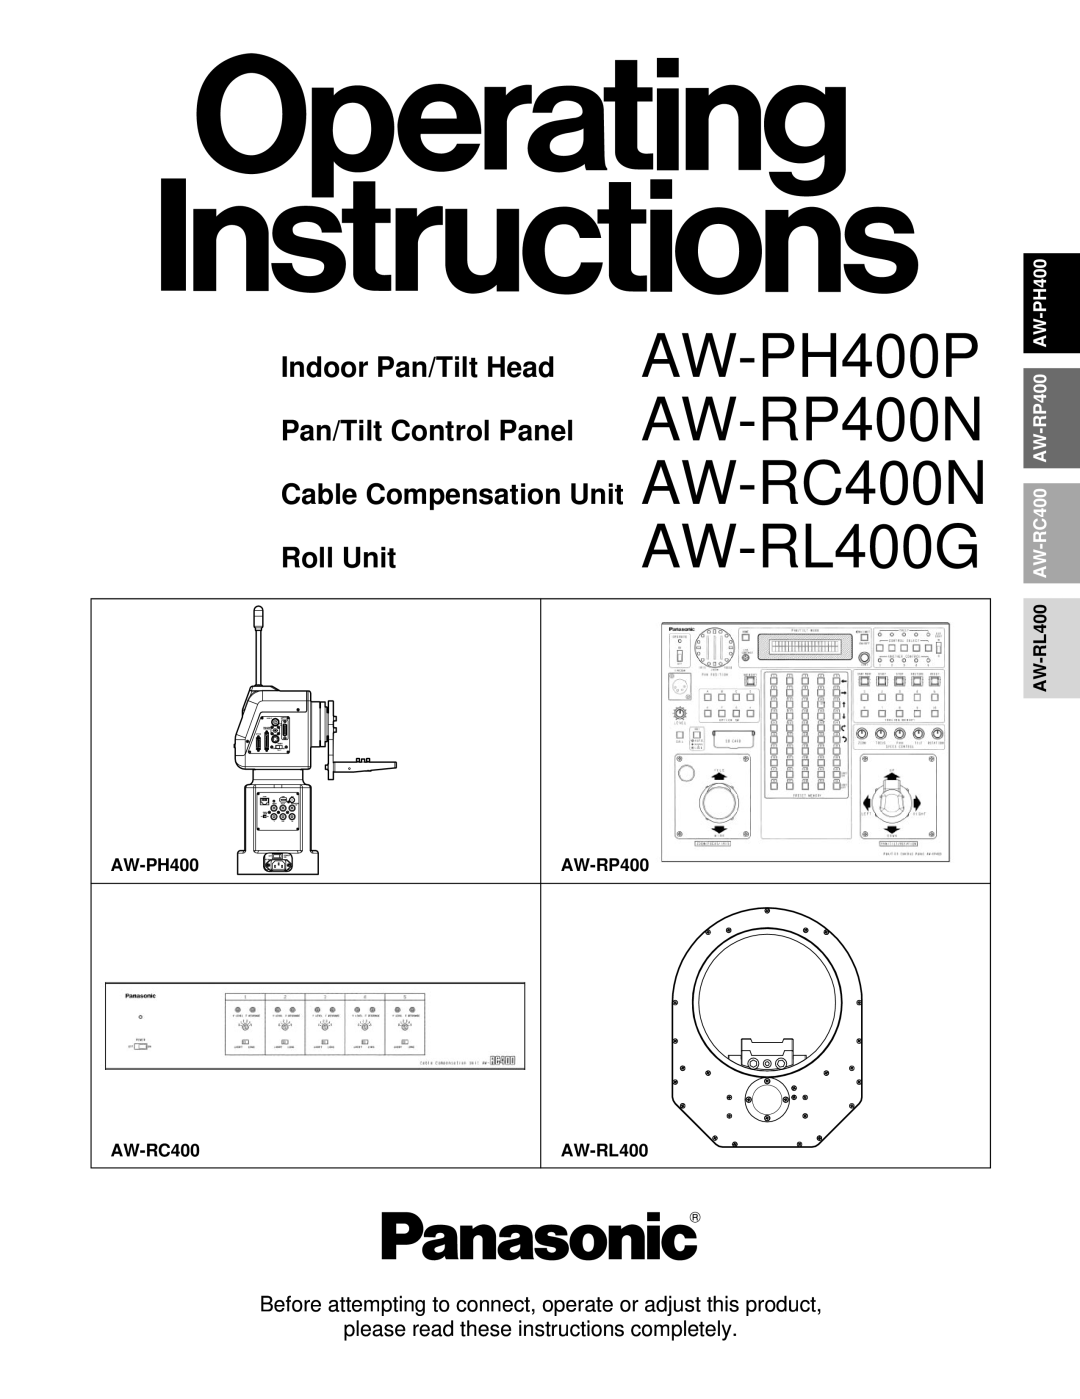 Panasonic AW-RC400N, AW-RP400N, AW-PH400P manual AW-PH400 AW-RP400 AW-RC400 AW-RL400 